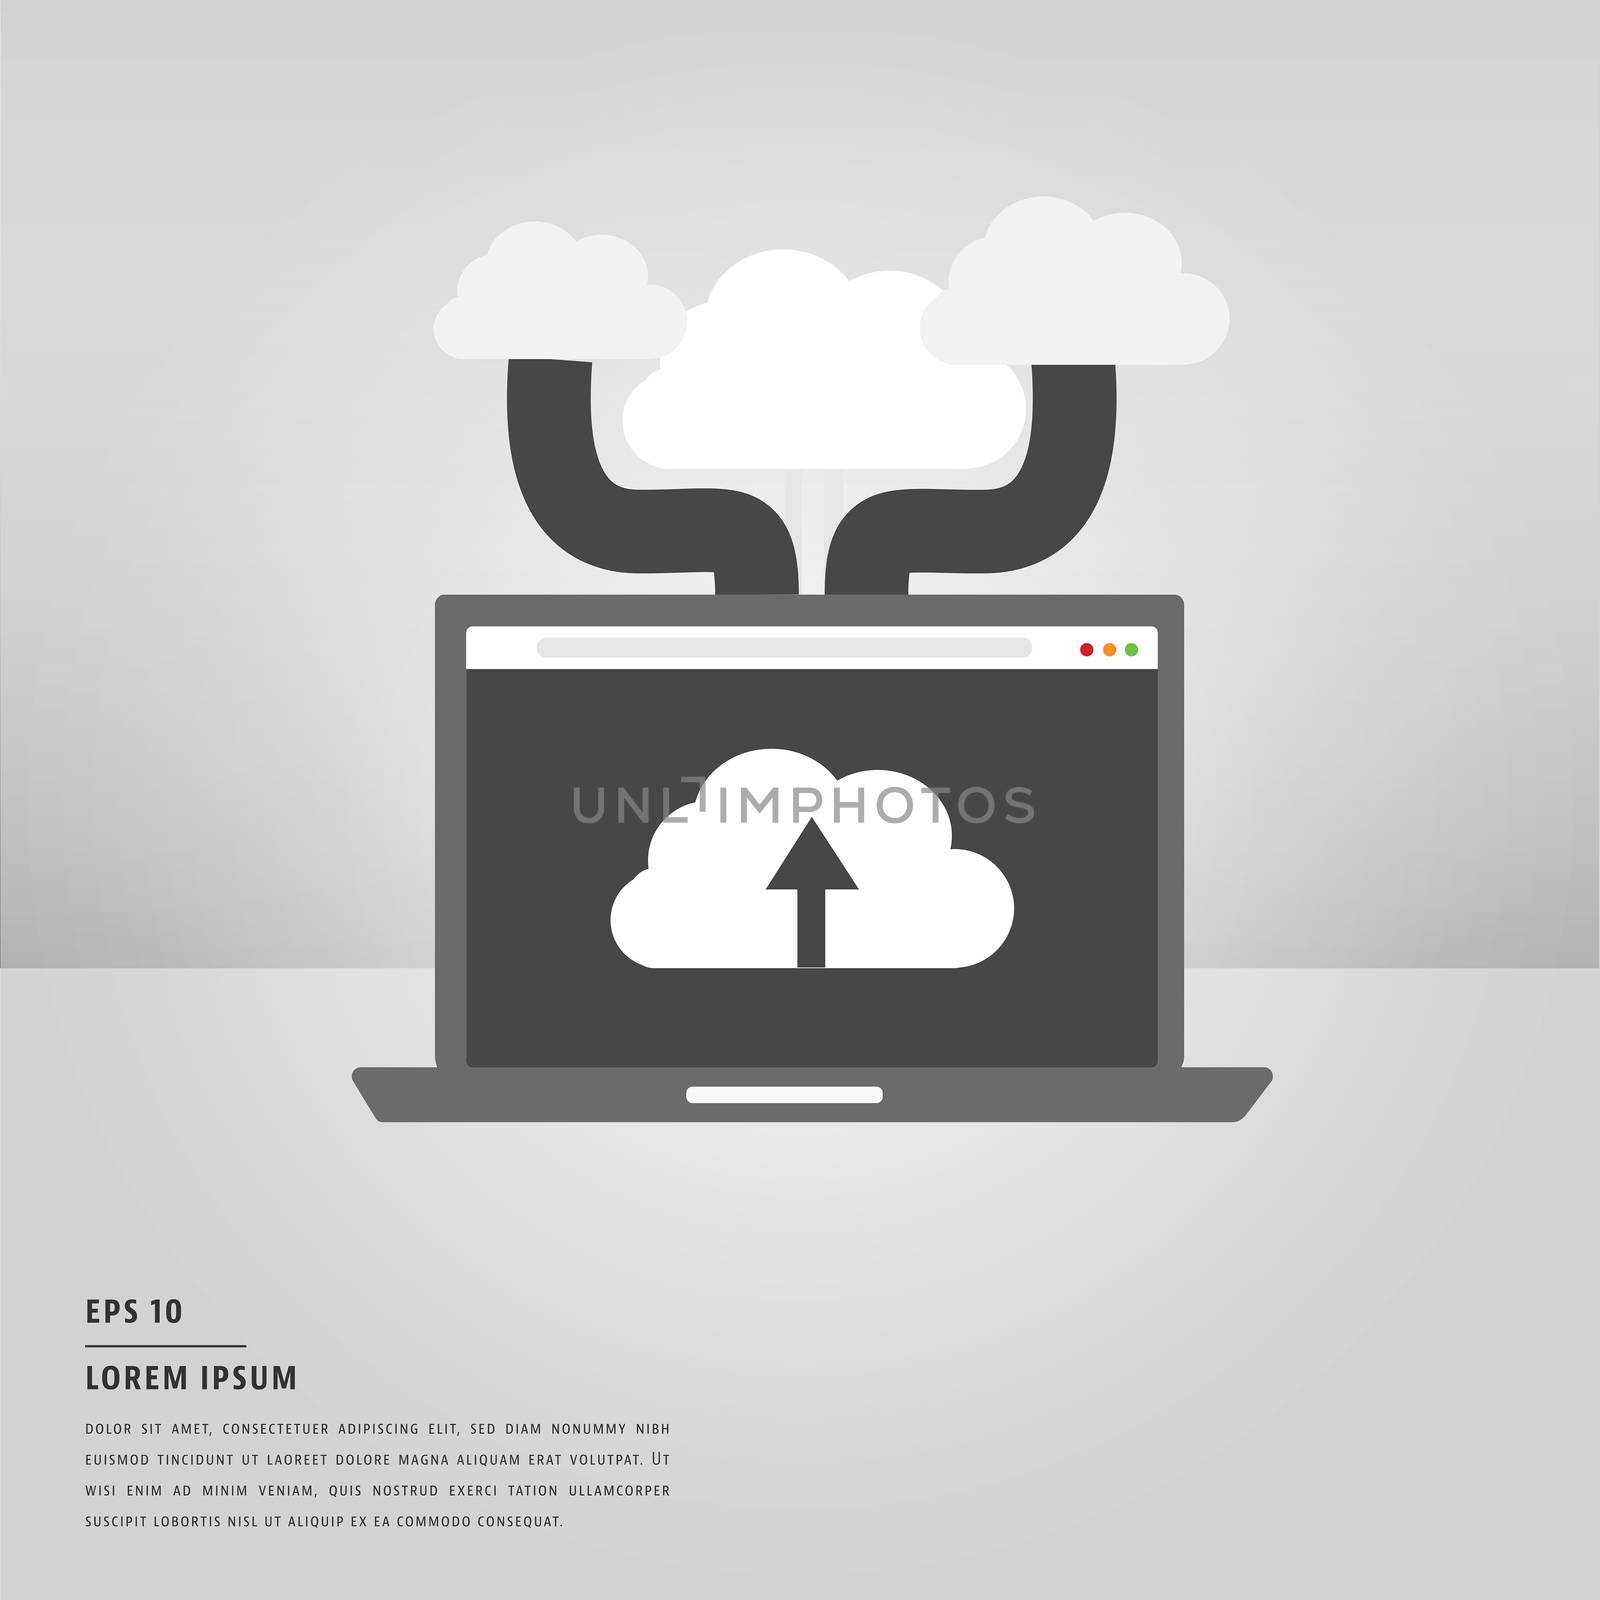 Lorem ipsum text with cloud computing concept by Wavebreakmedia